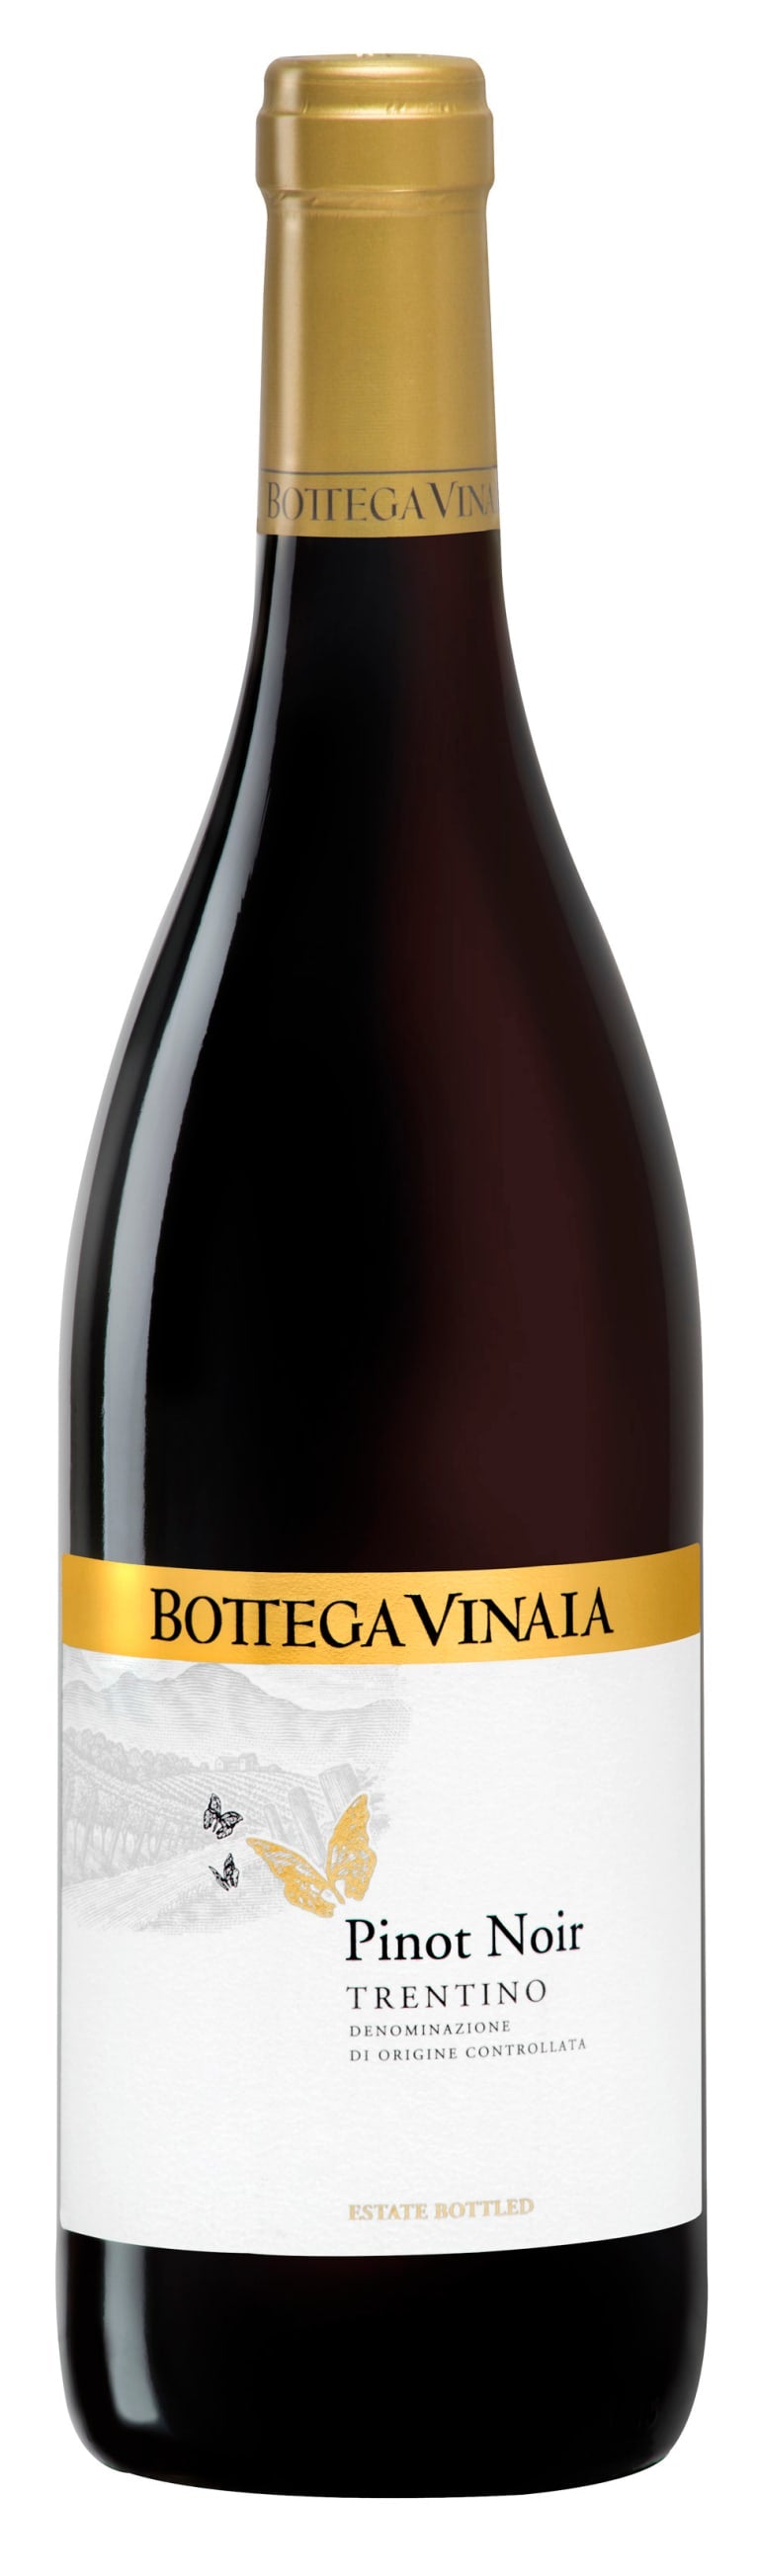 Bottega Vinaia Pinot Noir 2017